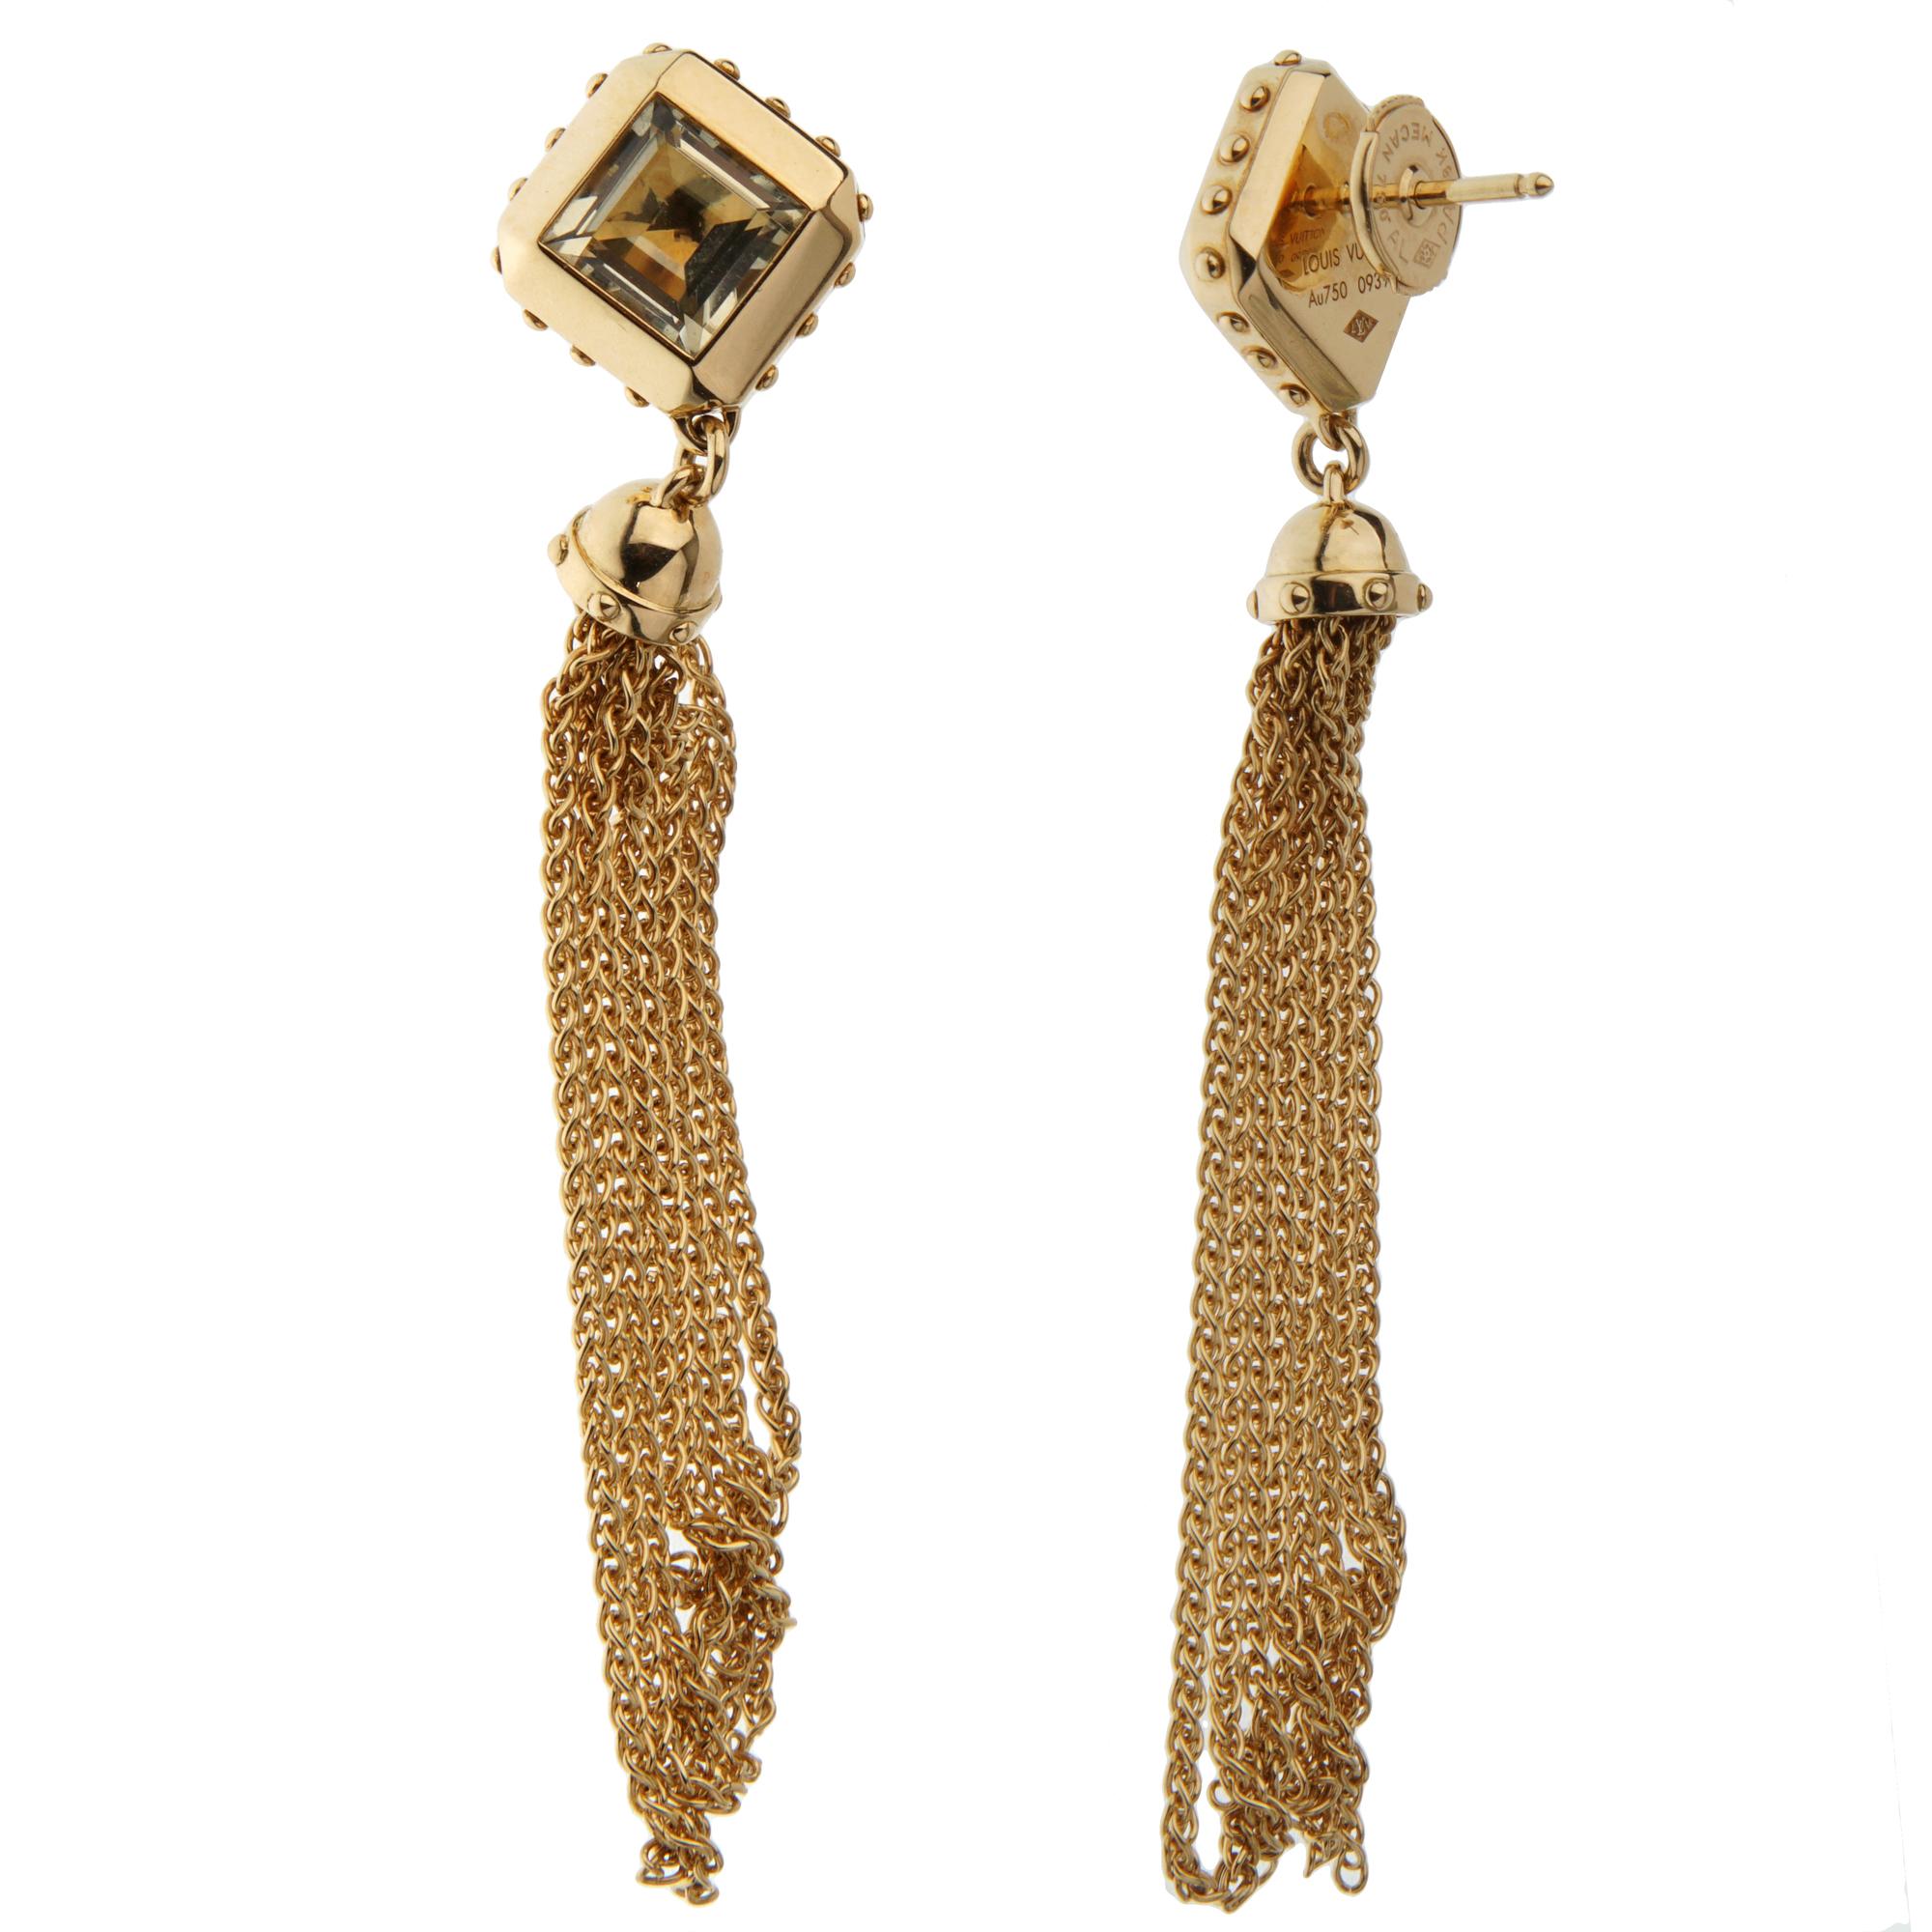 A fabulous pair of Louis Vuitton earrings showcasing 2 step cut quartz stones followed by a multi chain tassel in 18k yellow gold.